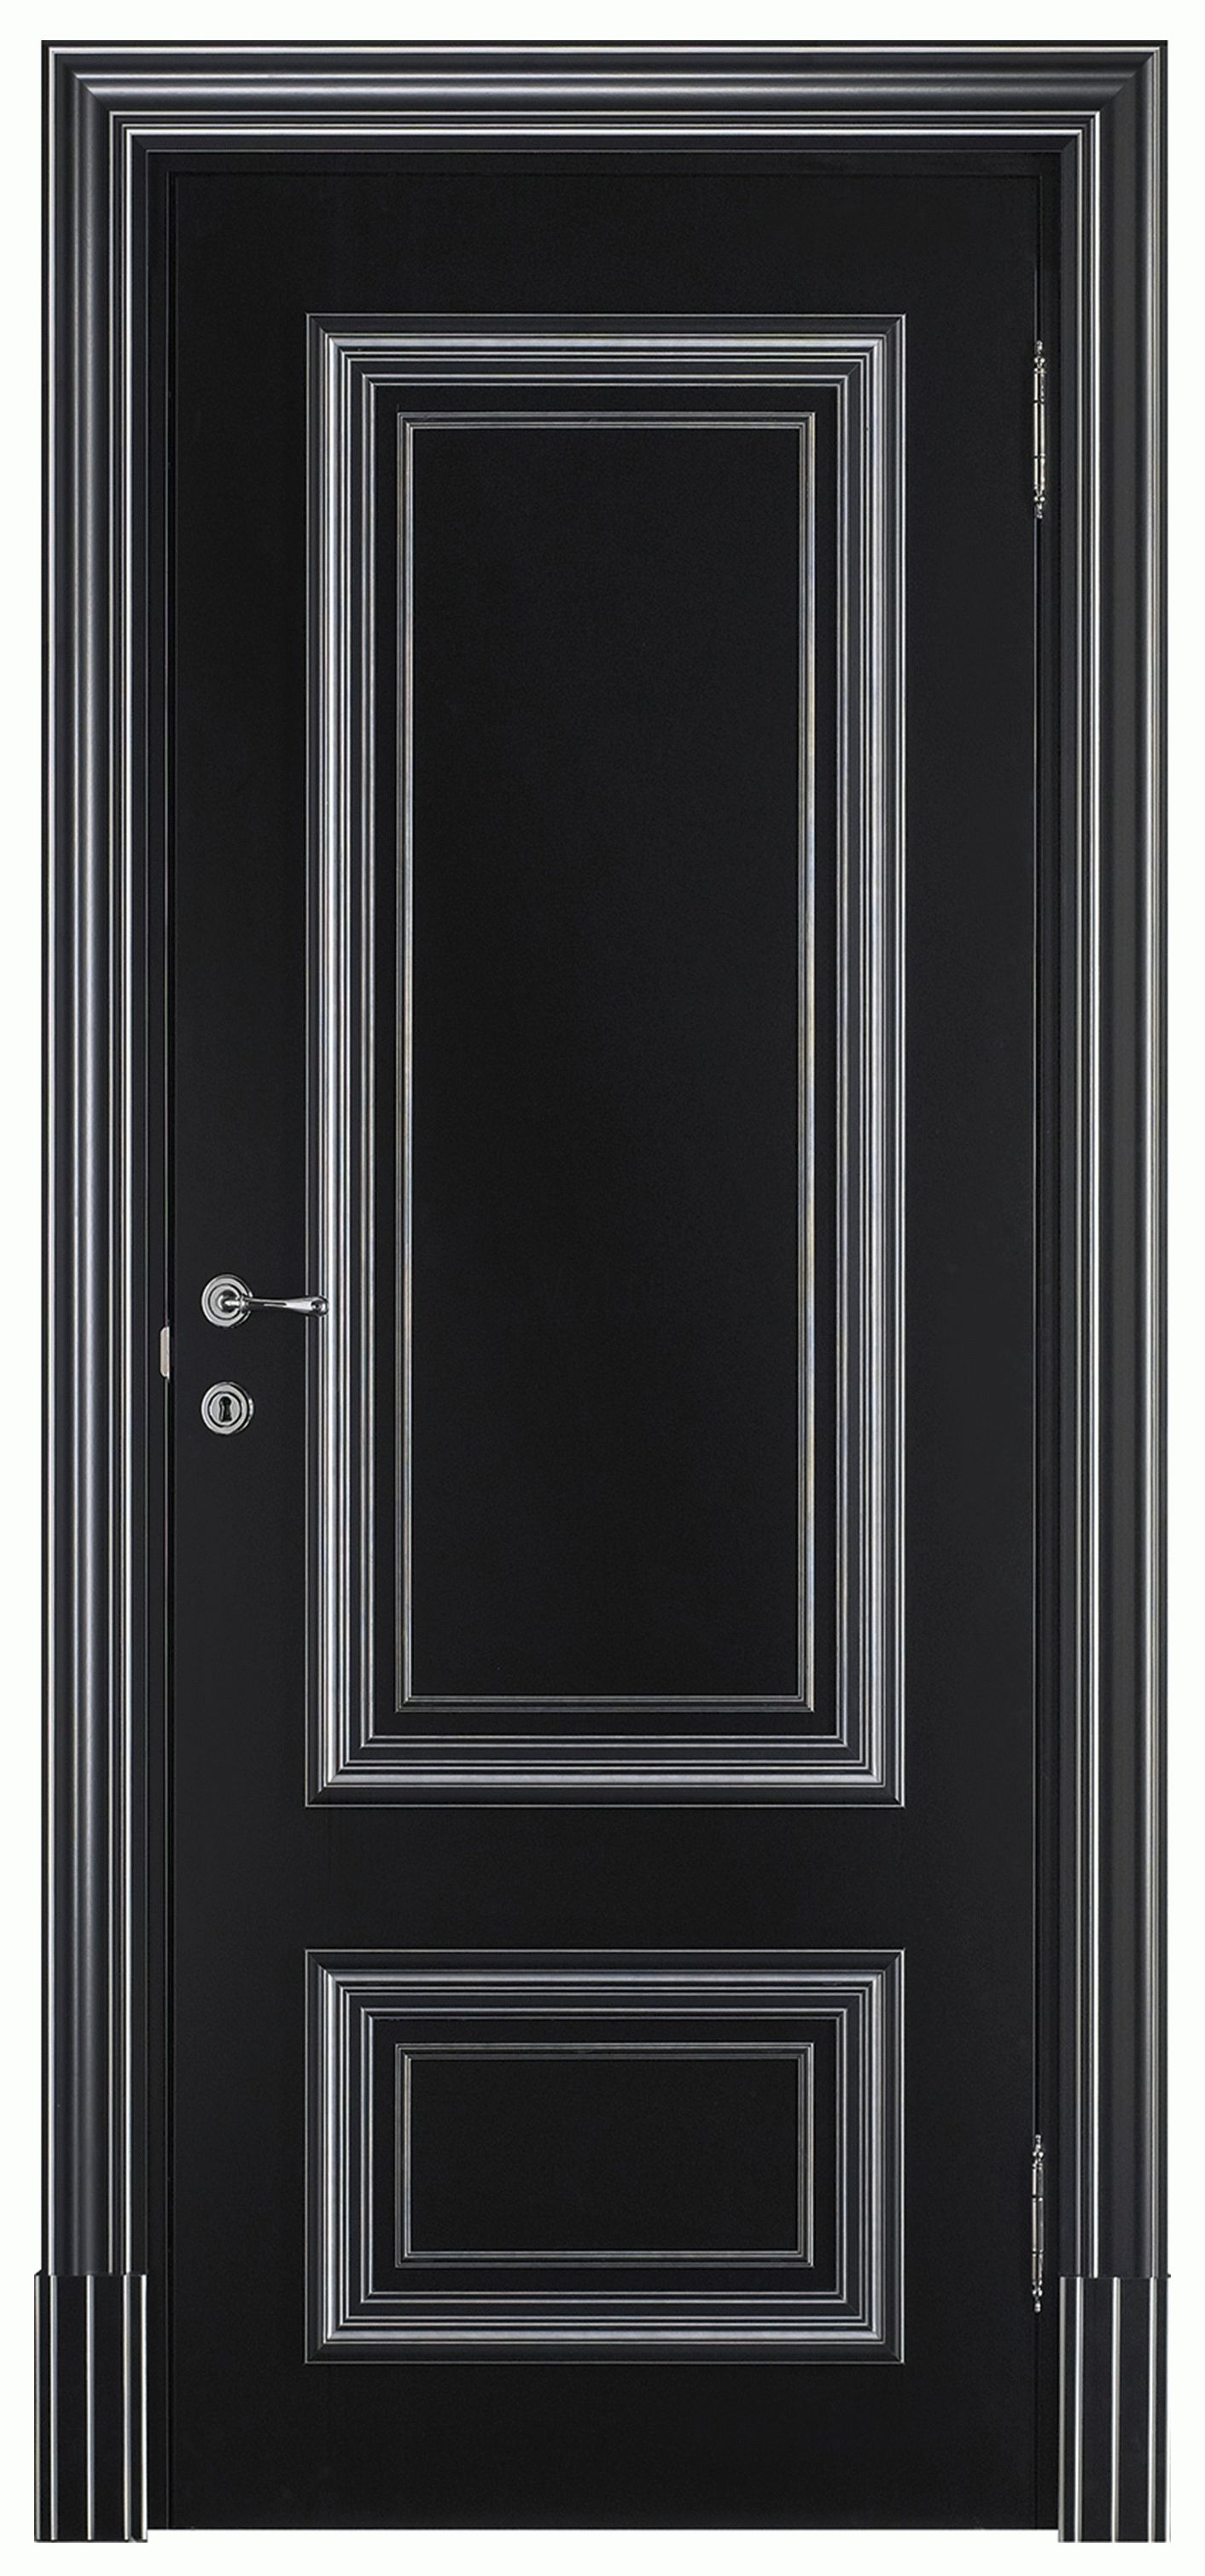  Potenza classico 110 PB Interior Door image from VULDI COMPANY